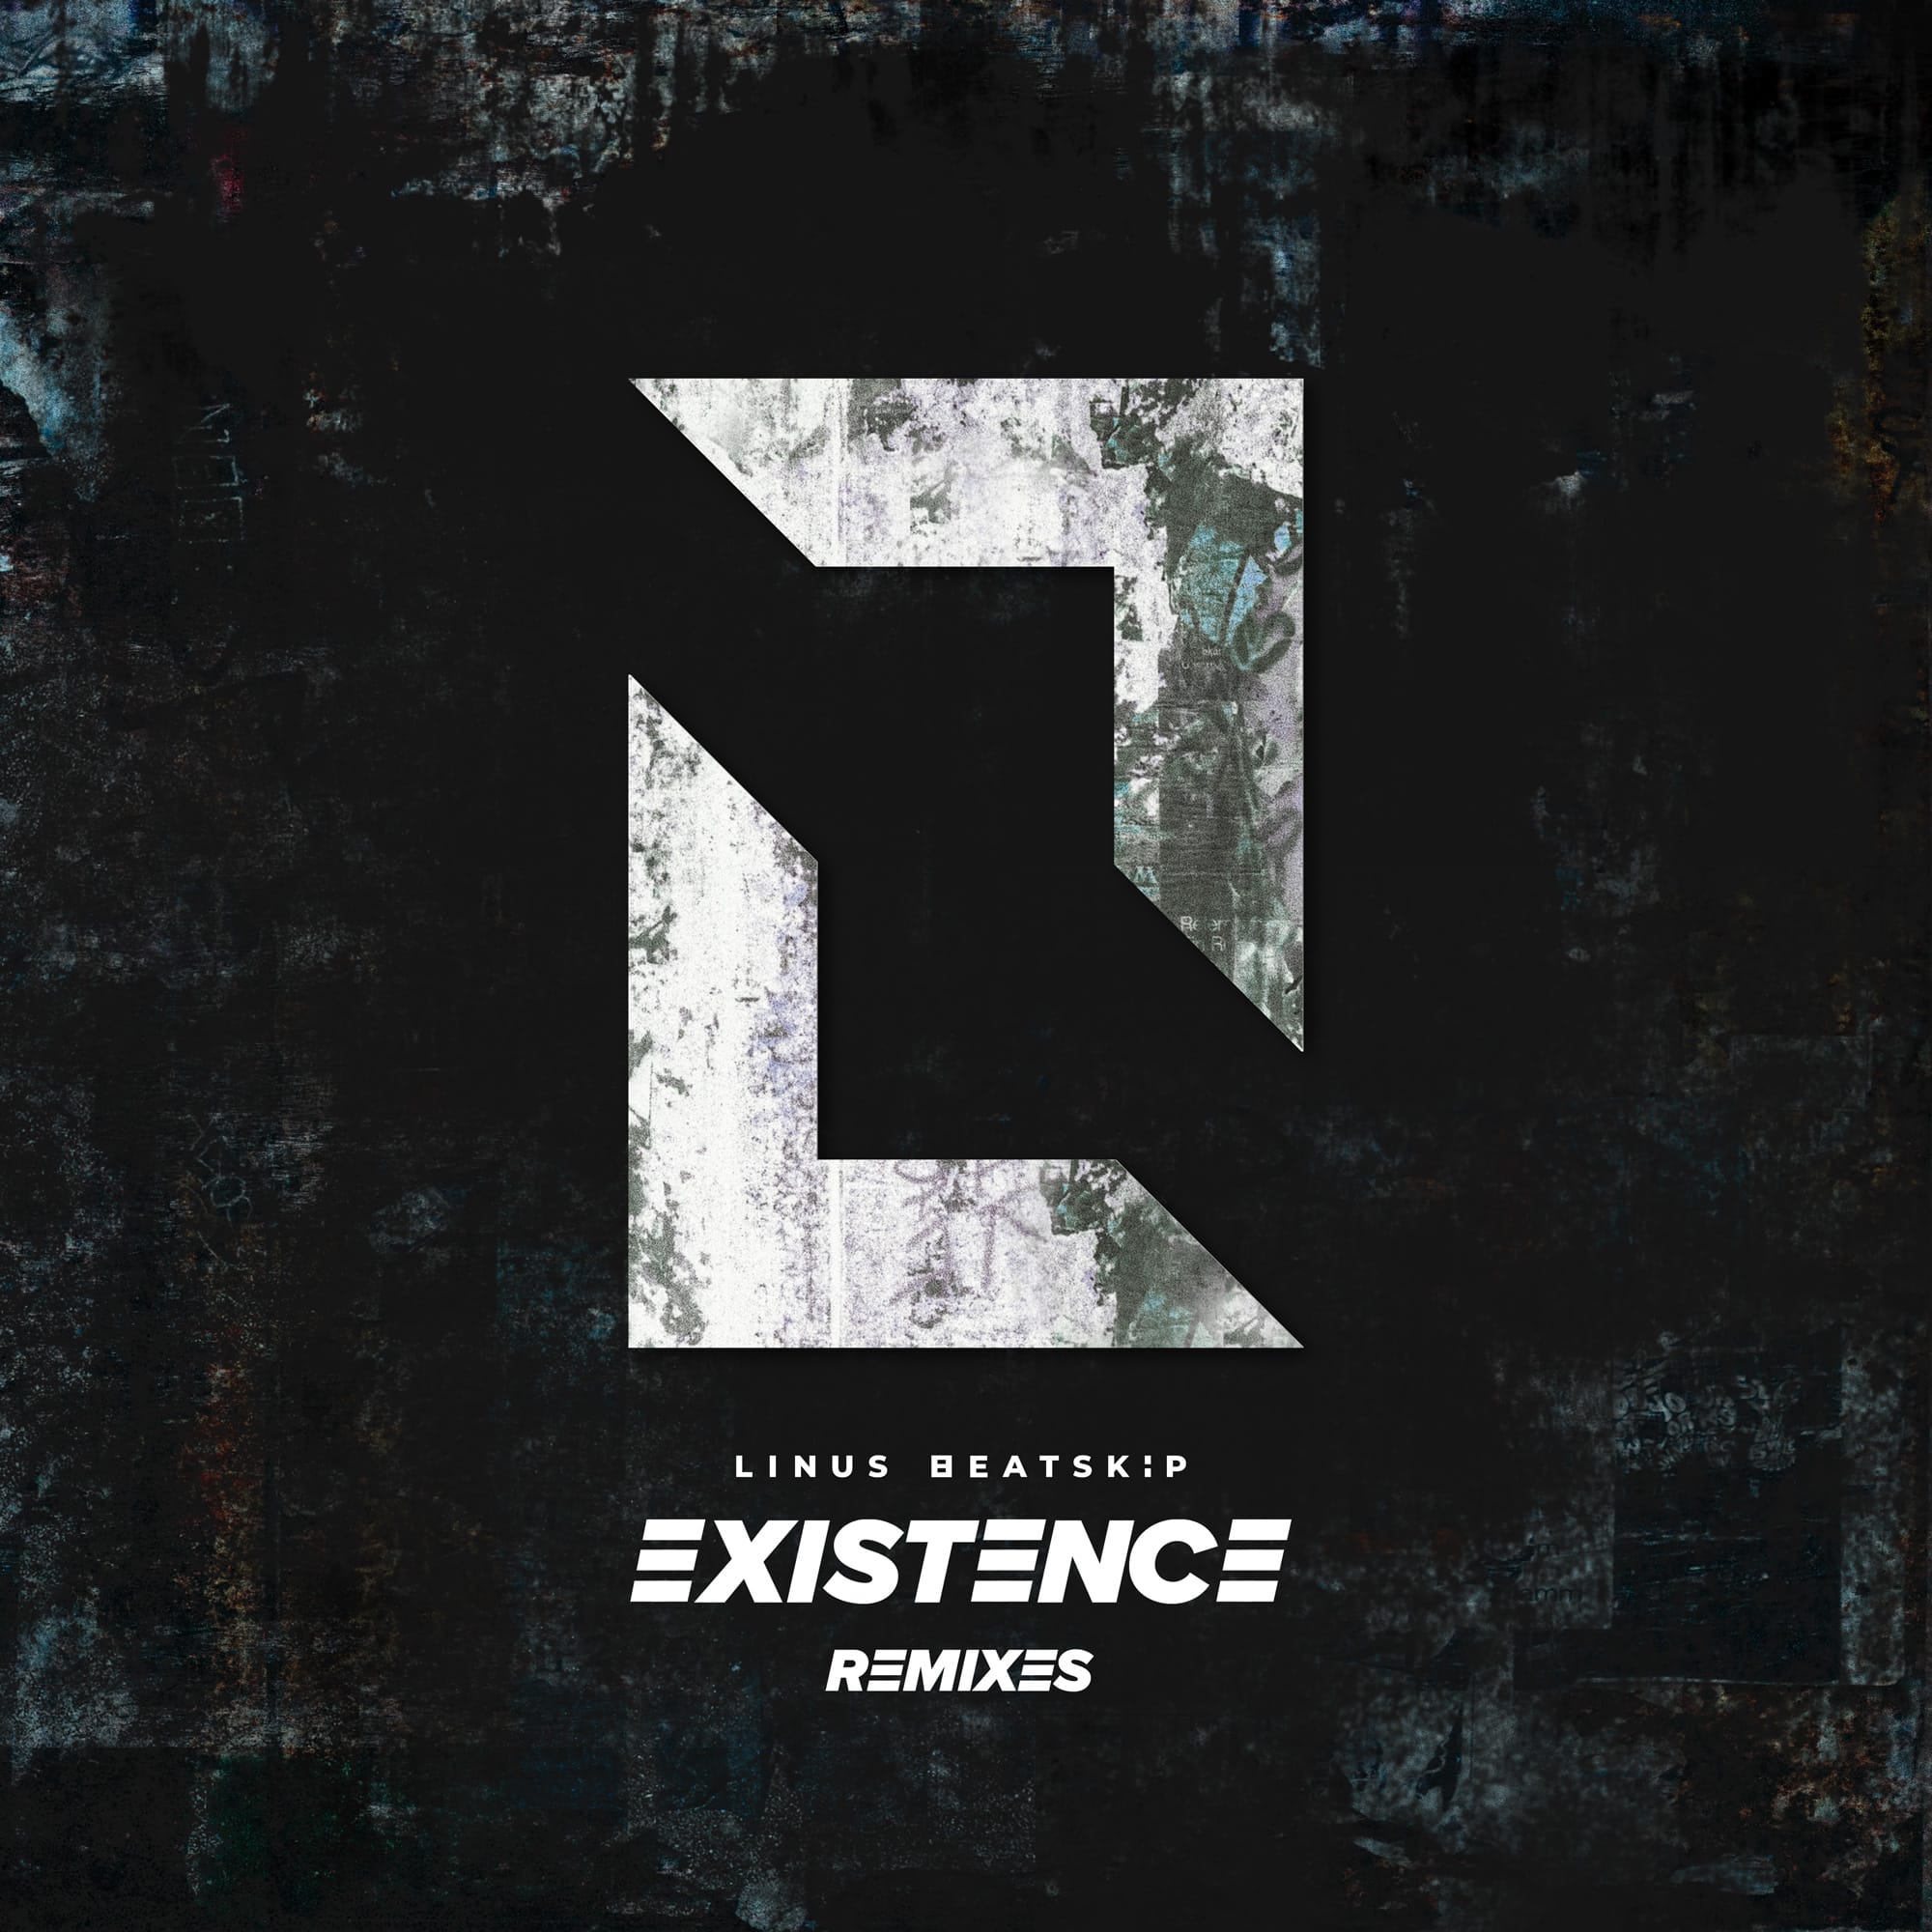 Existence Remixes - LINUS BEATSKiP